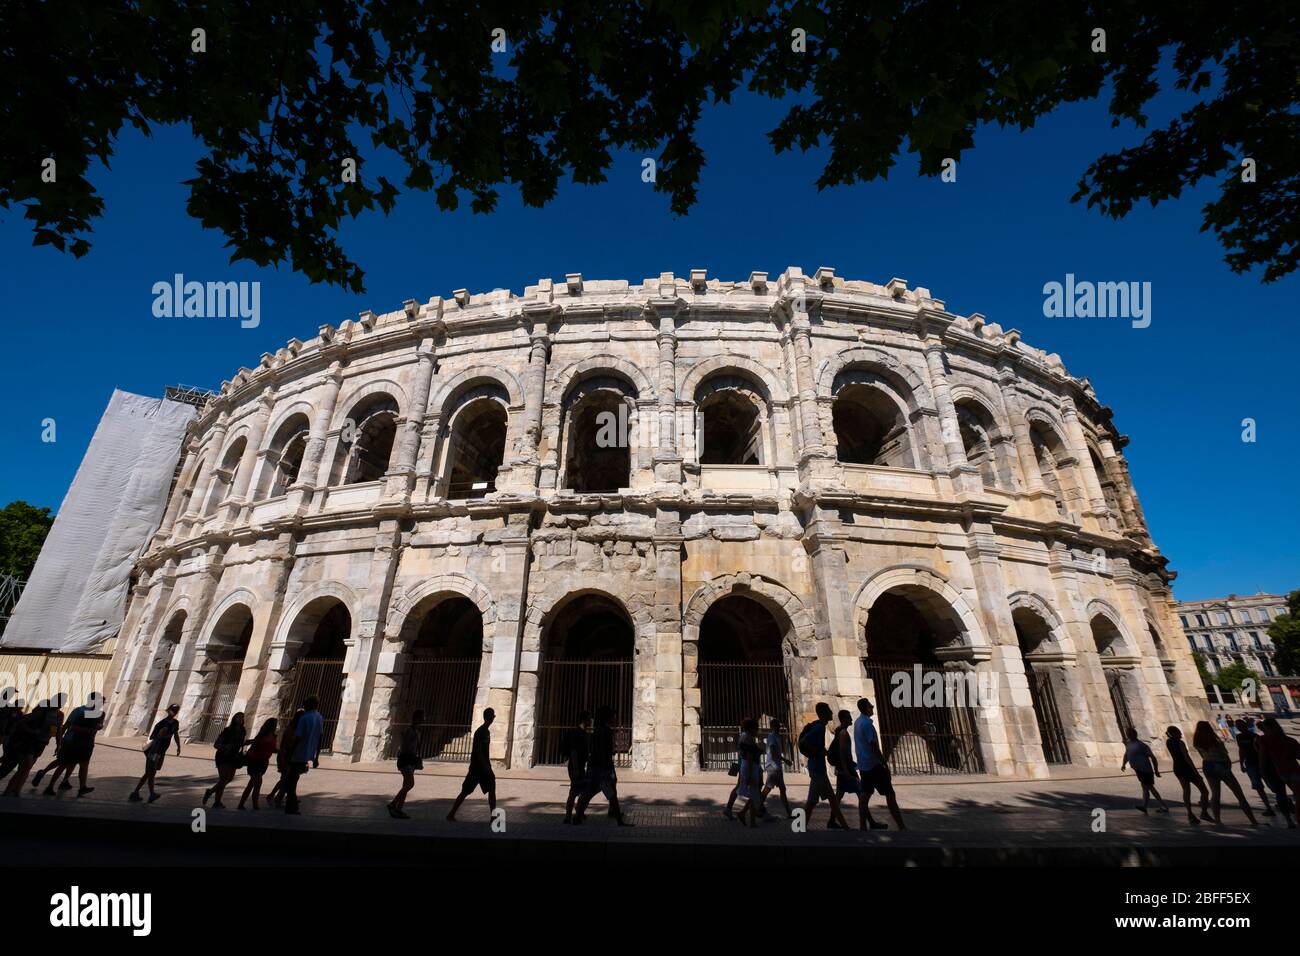 Arena von Nîmes römisches Amphitheater in Nimes, Frankreich, Europa Stockfoto